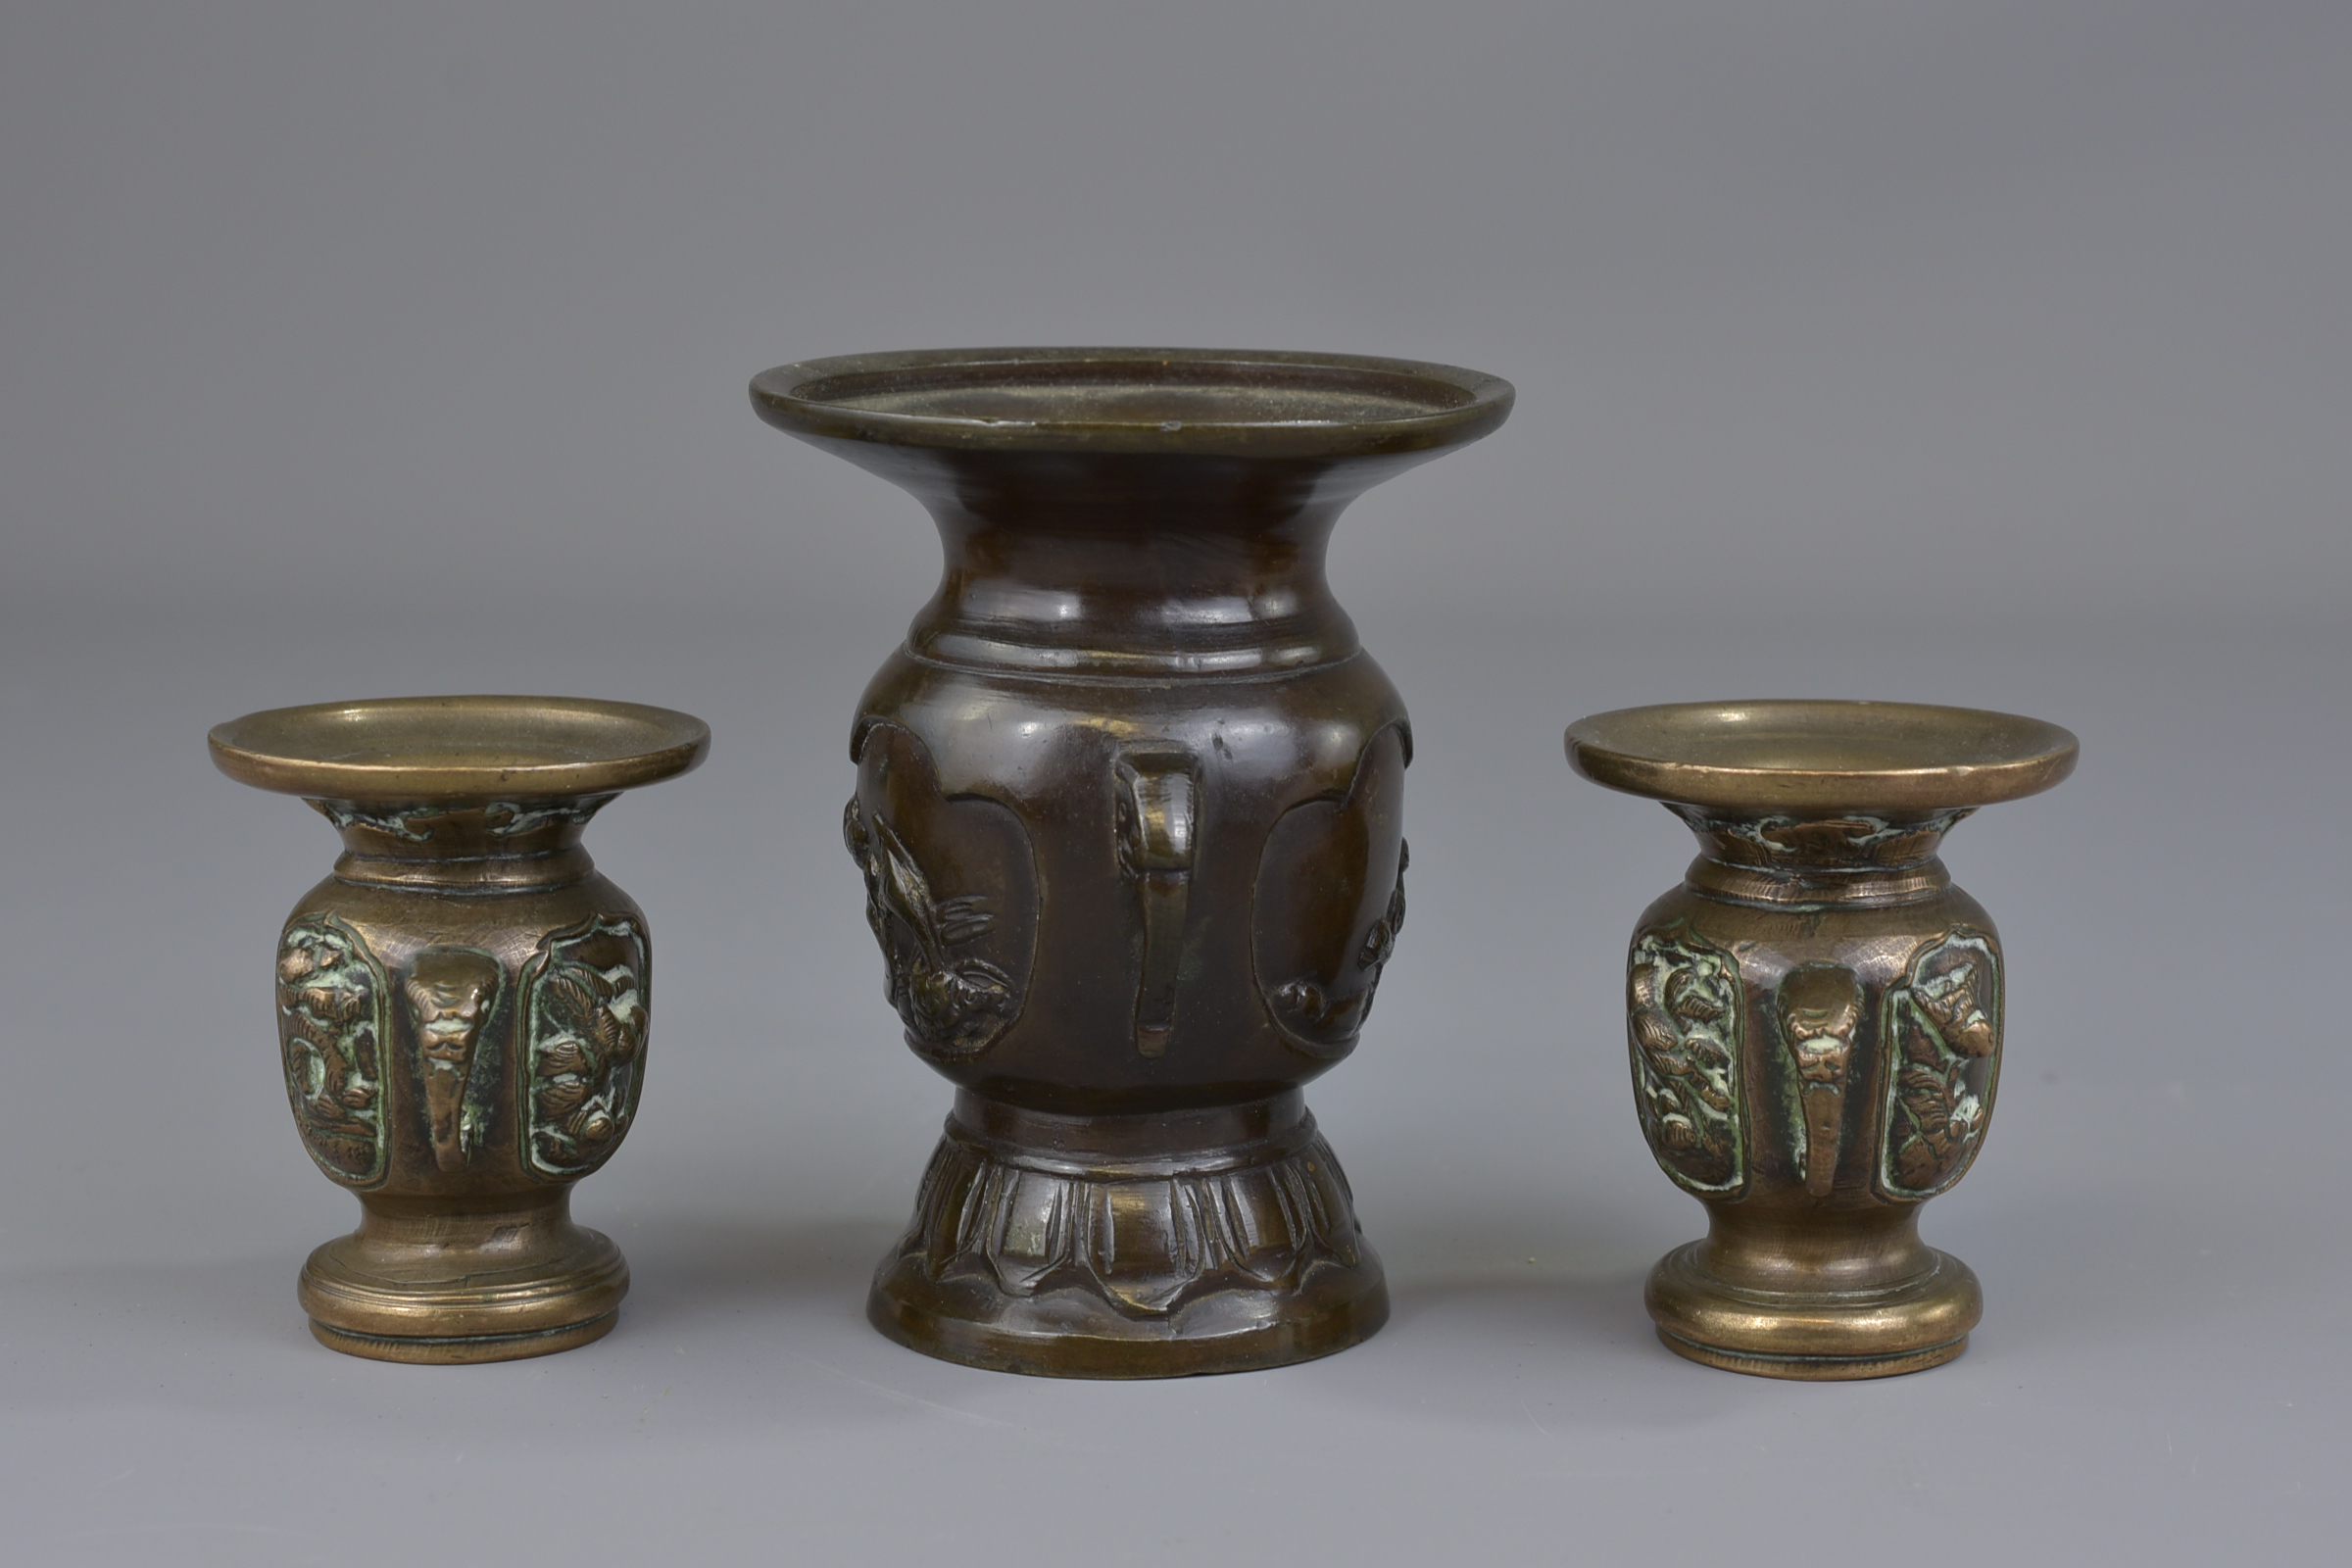 Three Japanese 19th century bronze vases. 6.5 cm - 10 cm tall. - Image 2 of 5